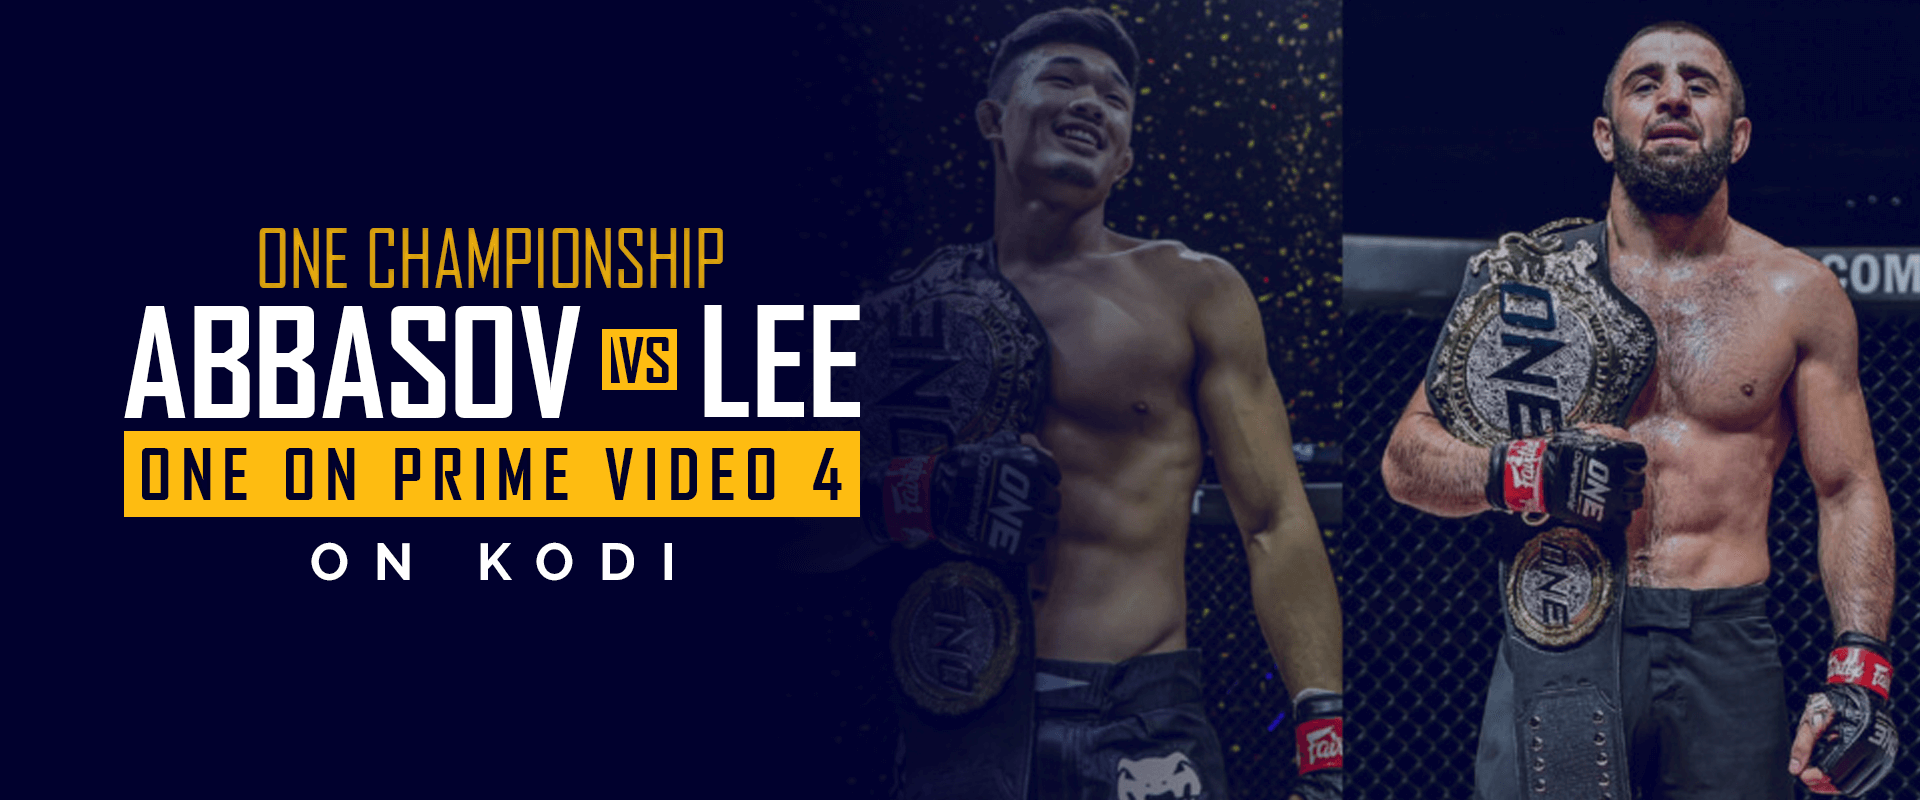 Watch One Championship on Kodi- ONE ON PRIME VIDEO 4 - ABBASOV vs LEE